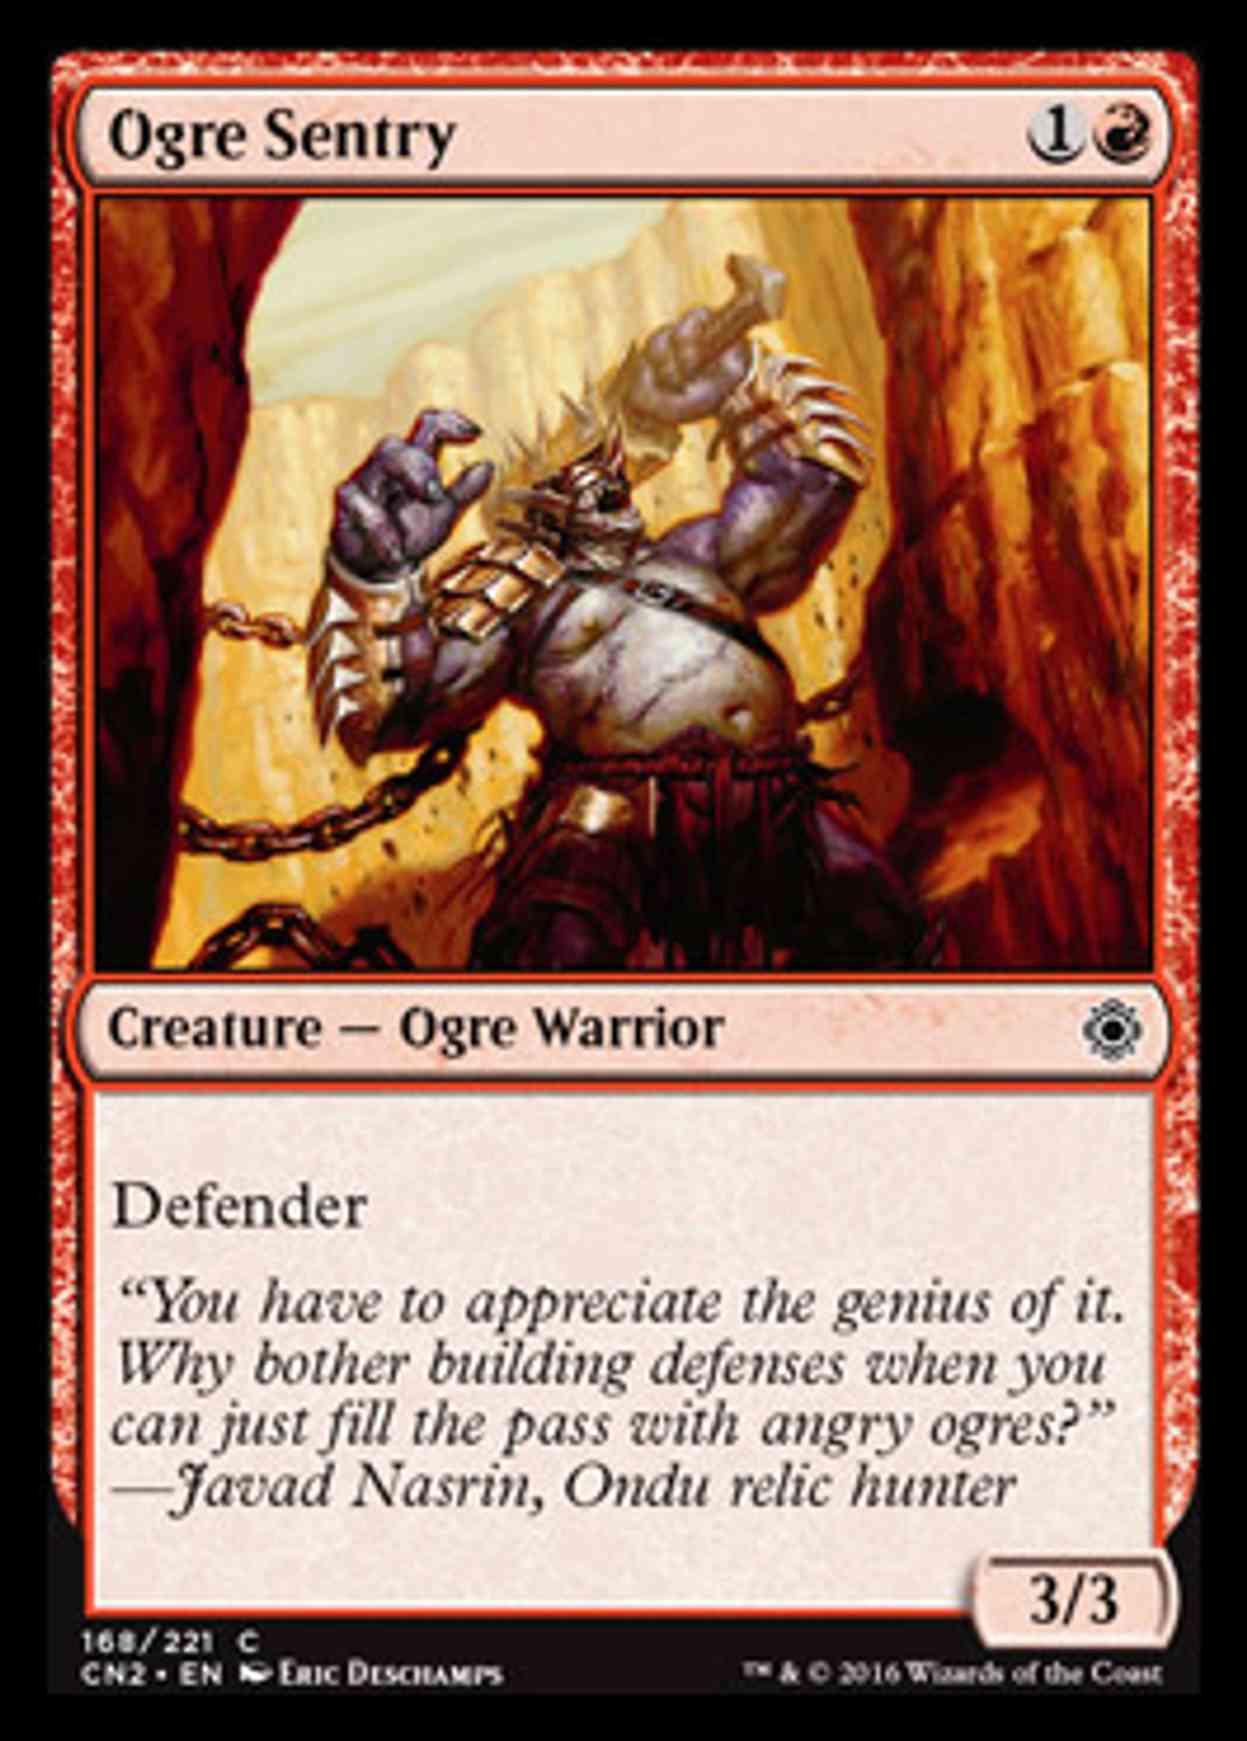 Ogre Sentry magic card front